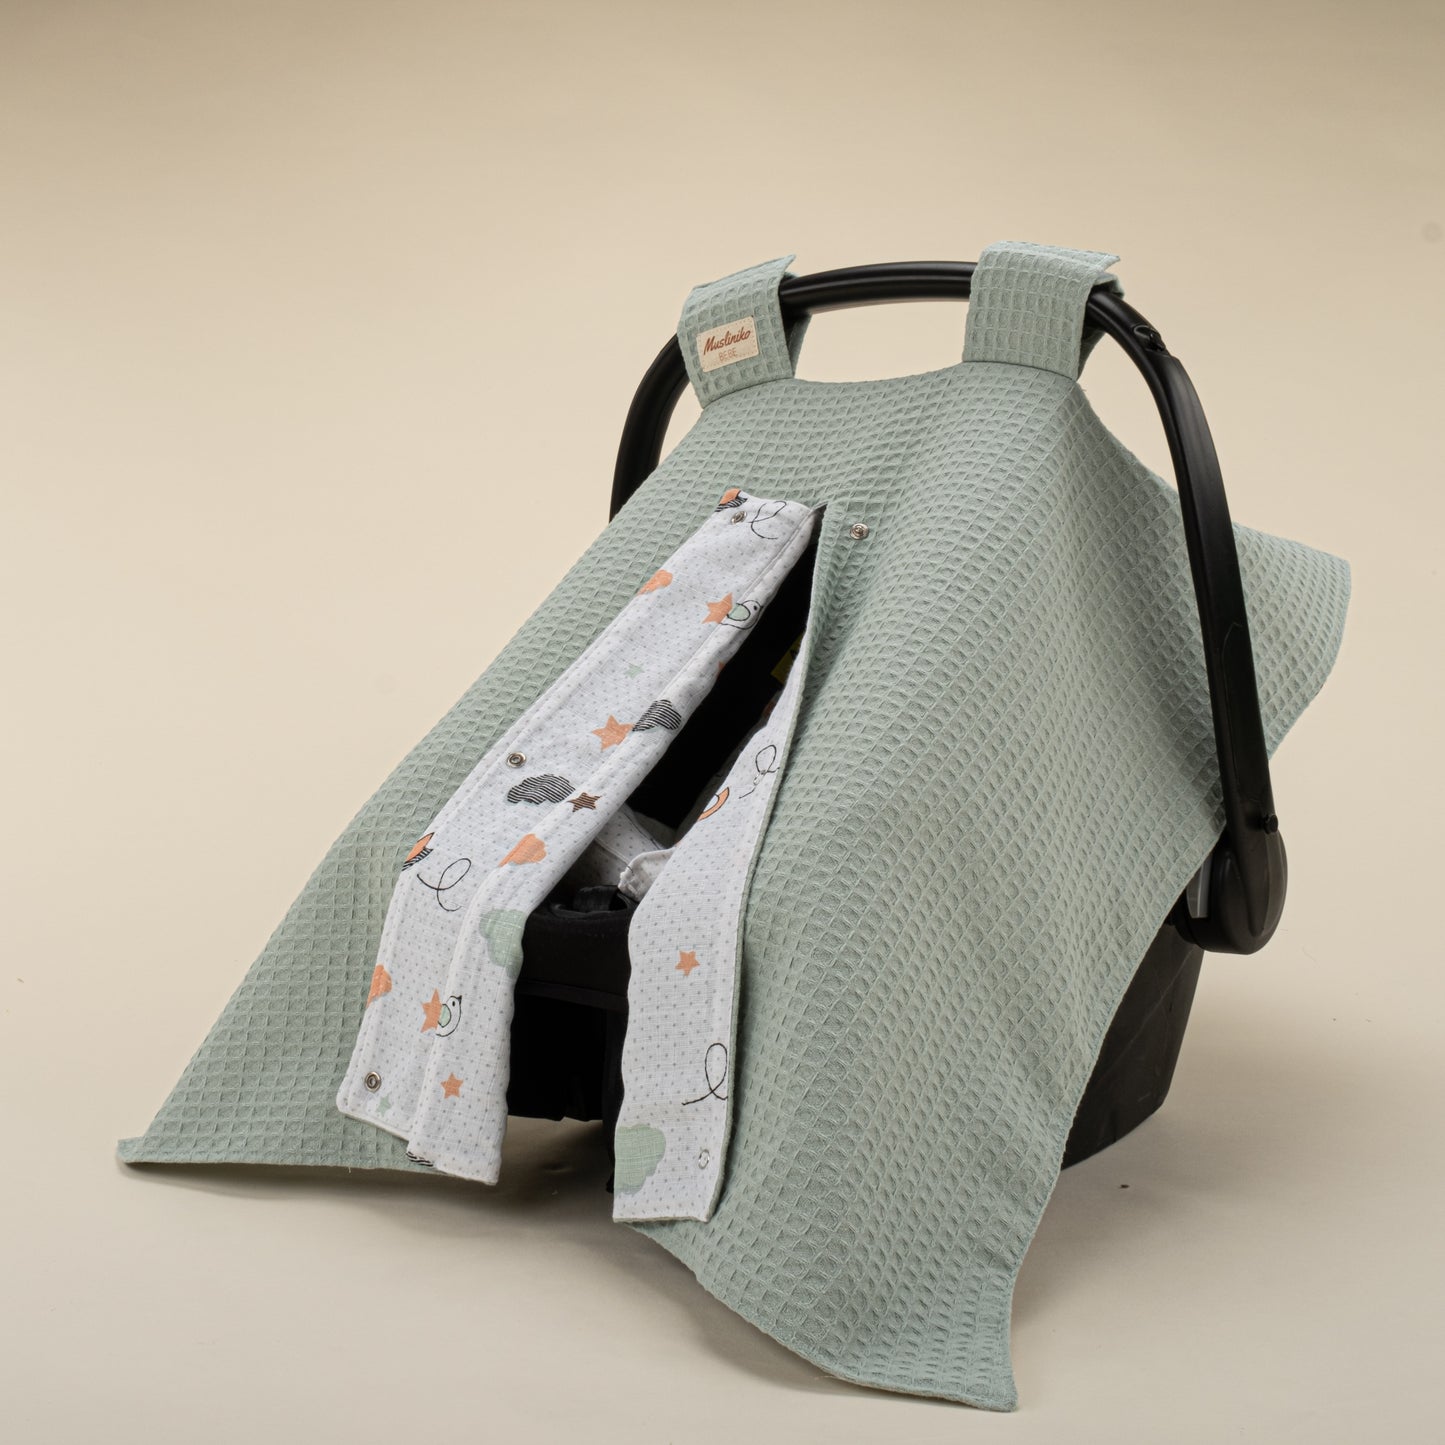 Stroller Cover Set - Double Side - Mint Honeycomb - Bird